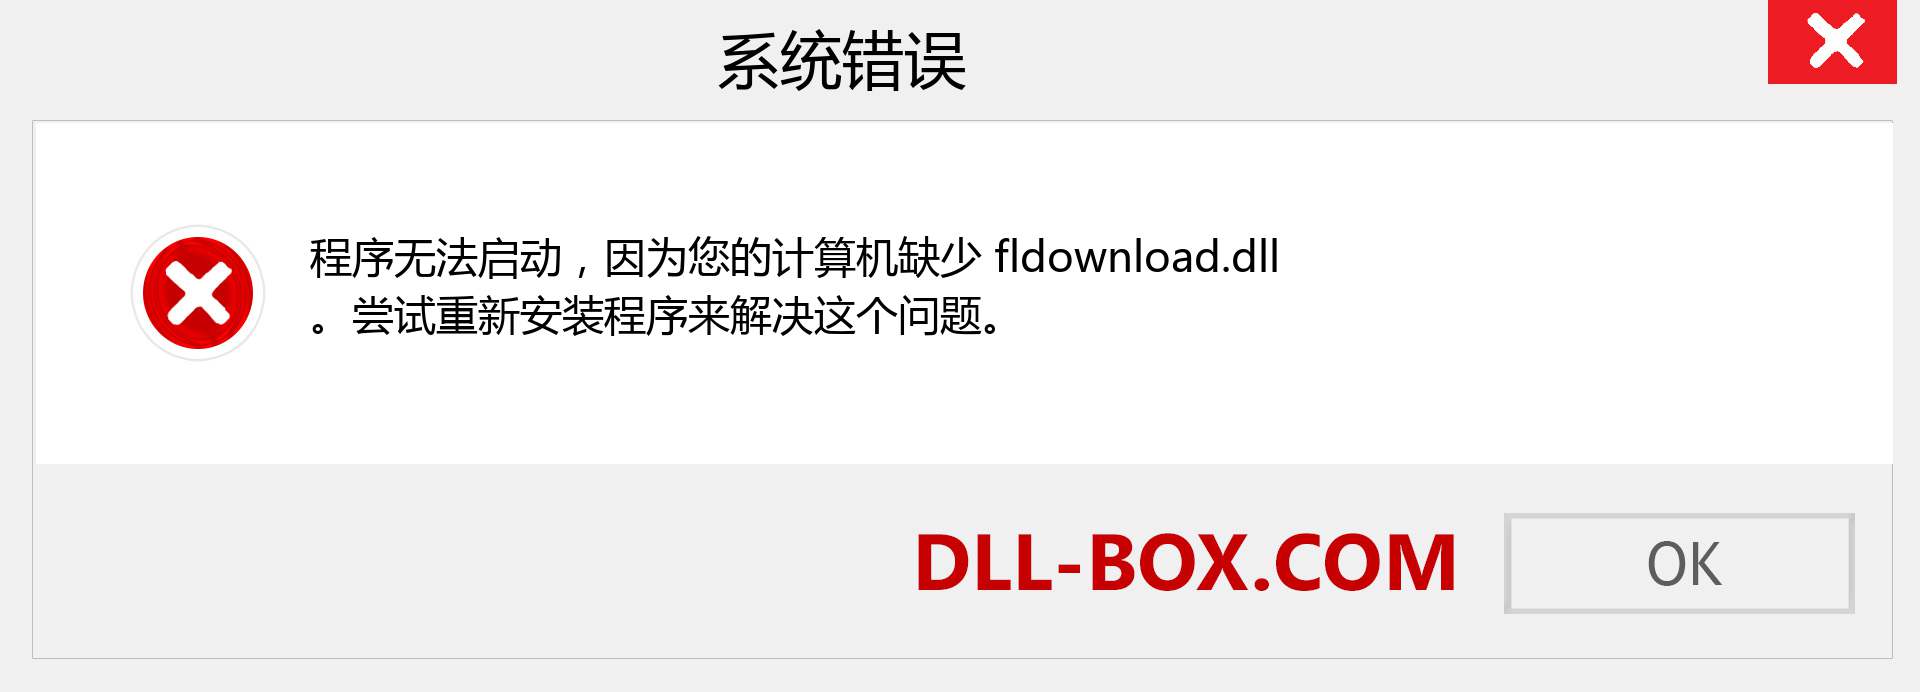 fldownload.dll 文件丢失？。 适用于 Windows 7、8、10 的下载 - 修复 Windows、照片、图像上的 fldownload dll 丢失错误